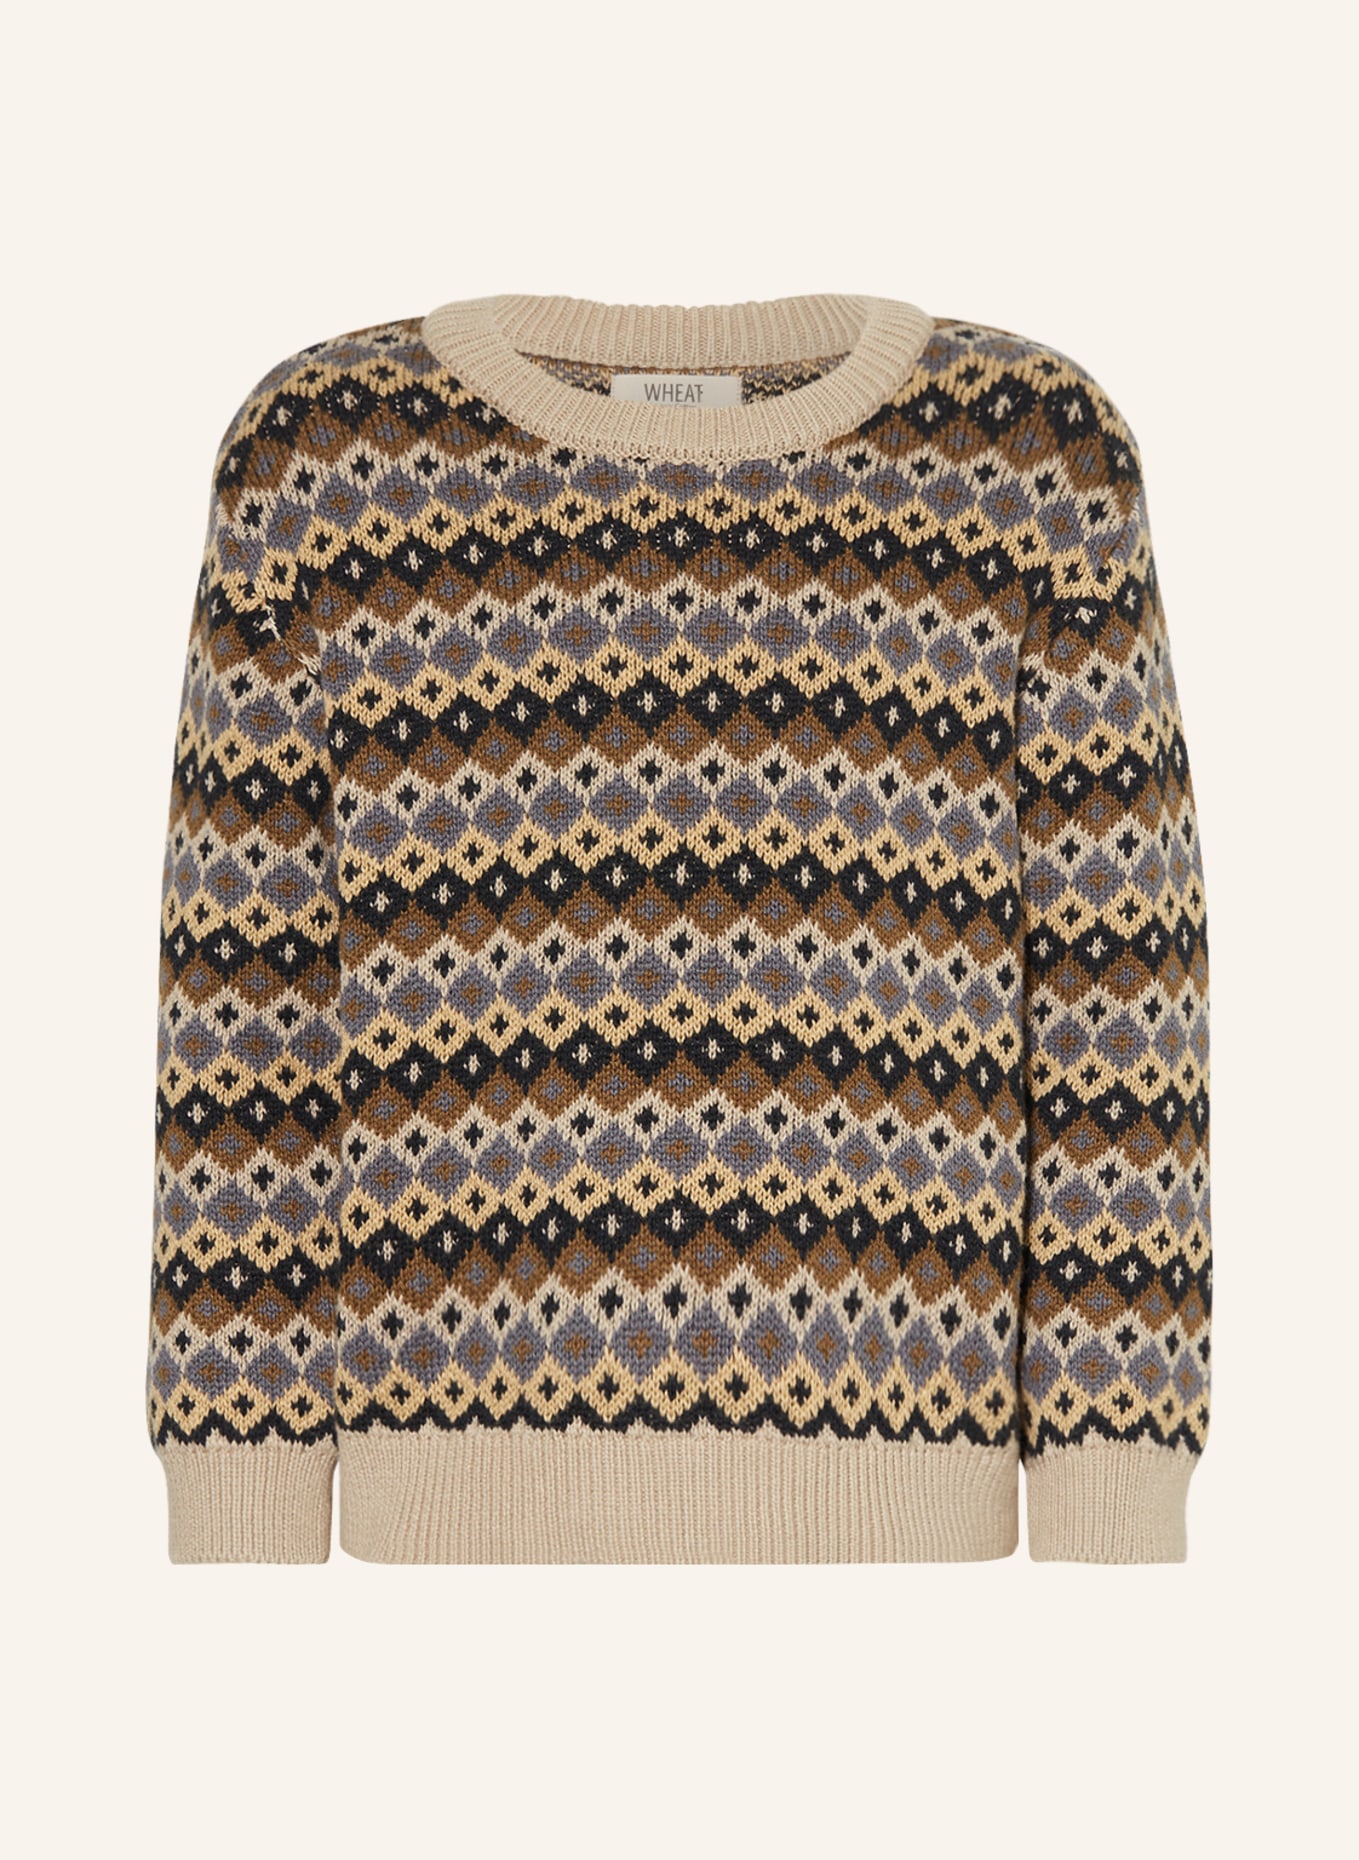 WHEAT Pullover, Farbe: HELLBRAUN/ BRAUN (Bild 1)